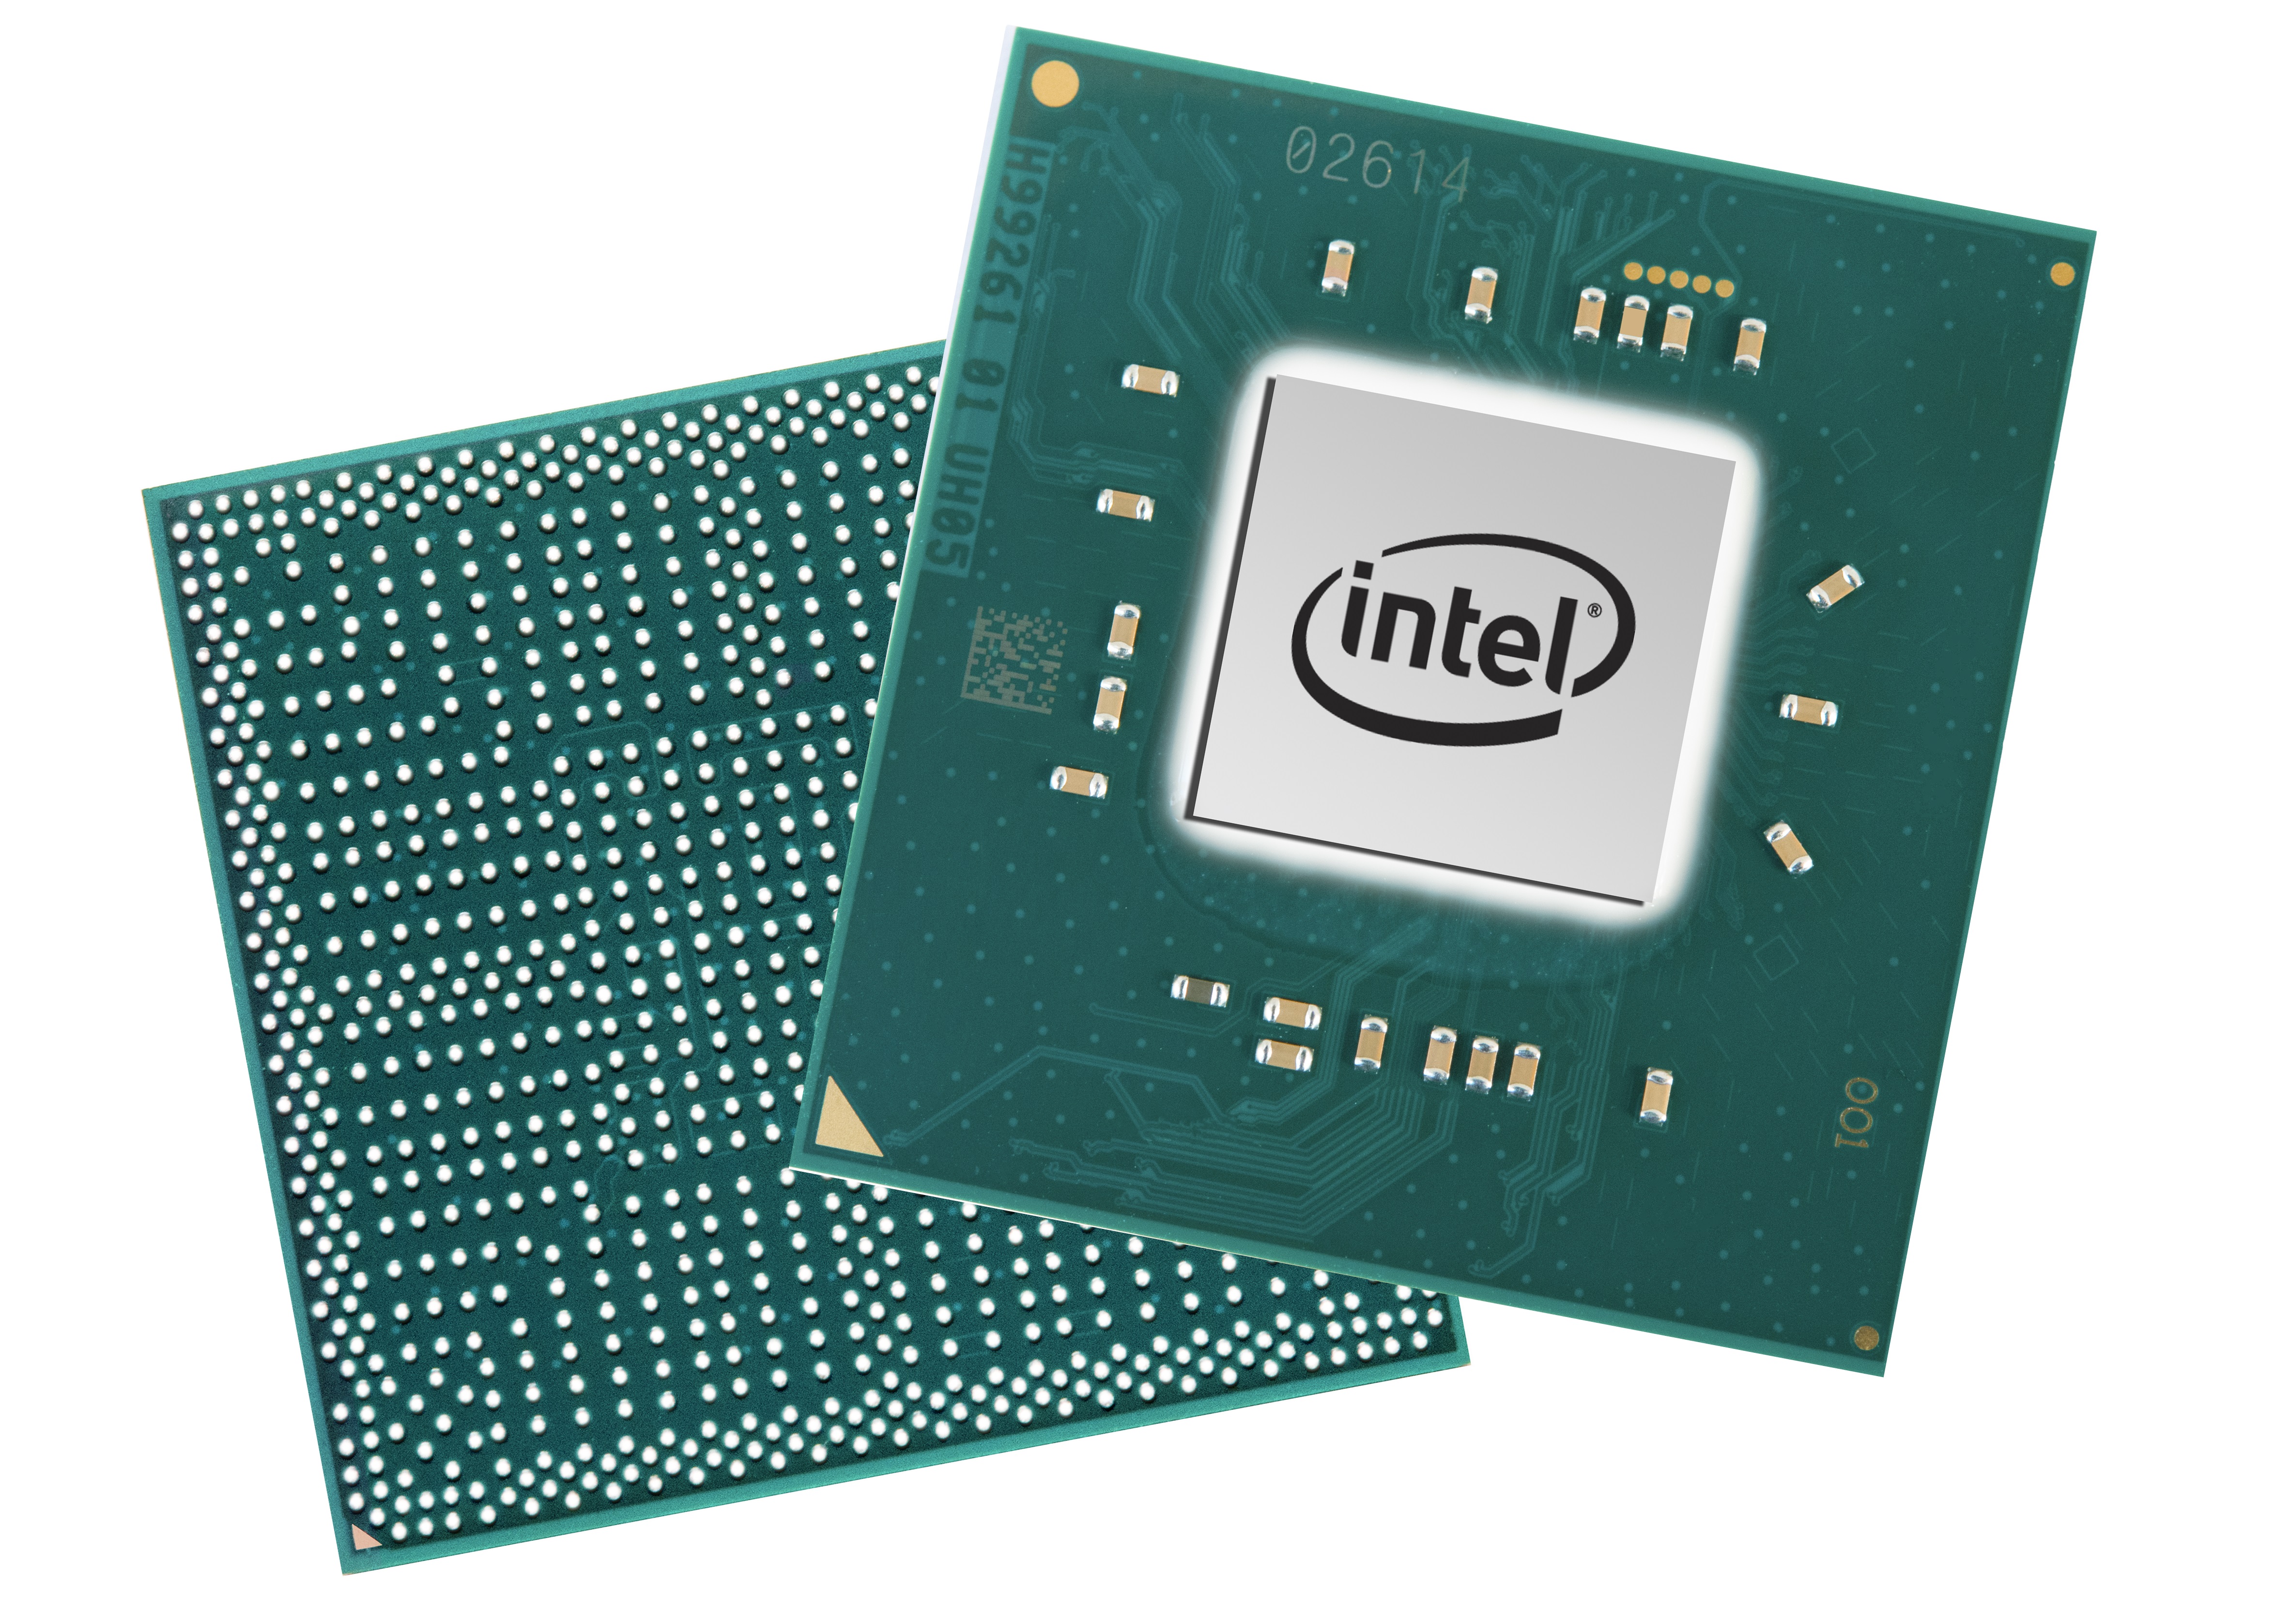 intel hd 4000 graphics card overclock macbook pro